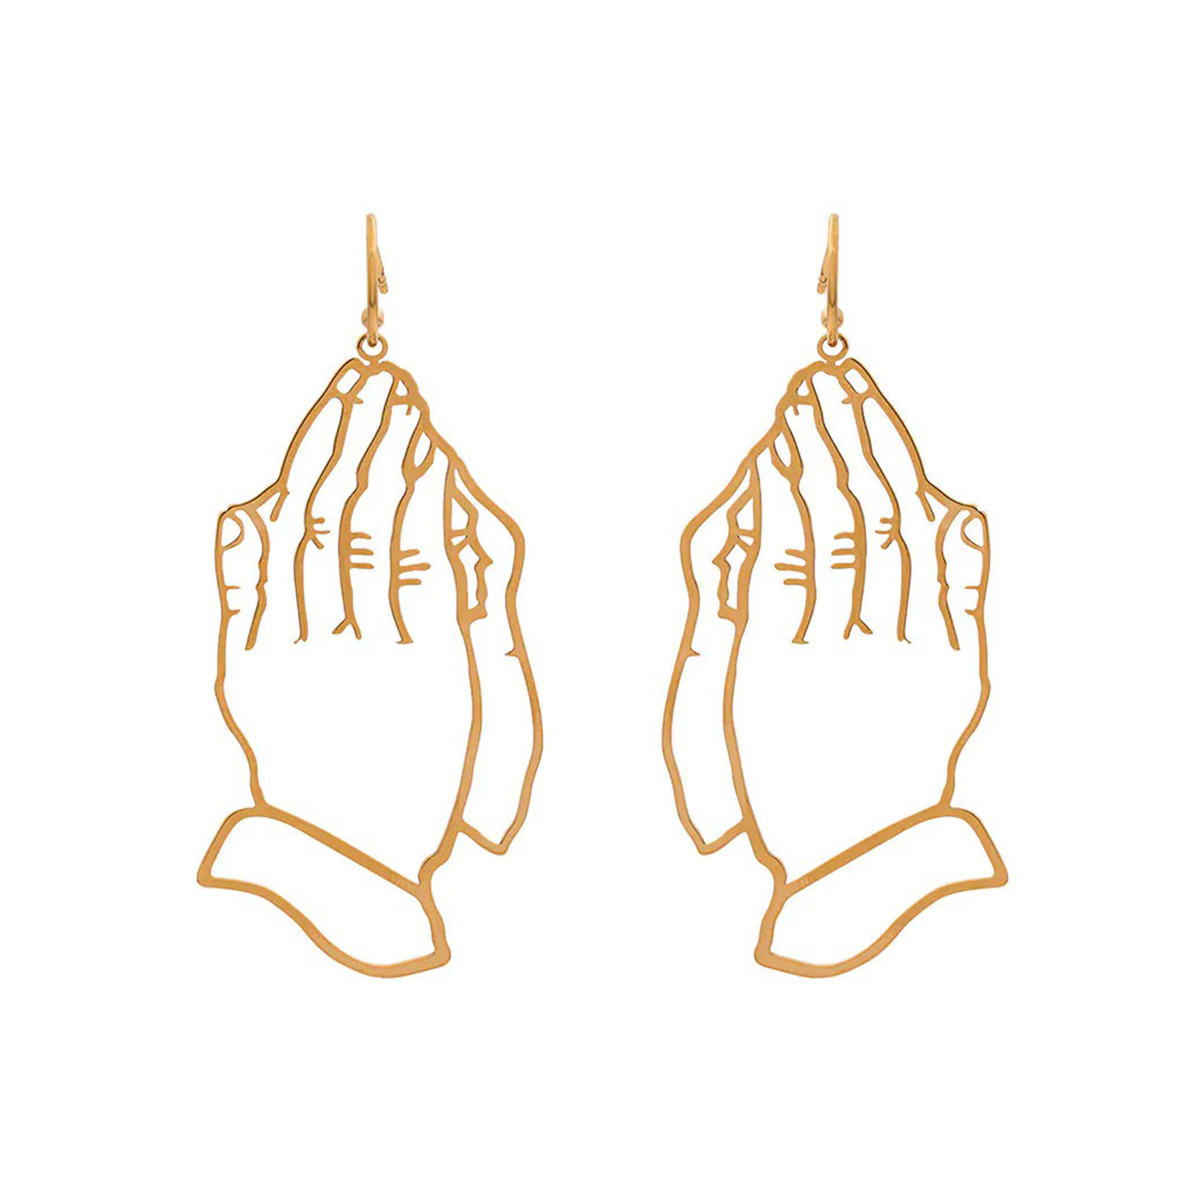 Simone Rocha praying hands earrings, $333, available here